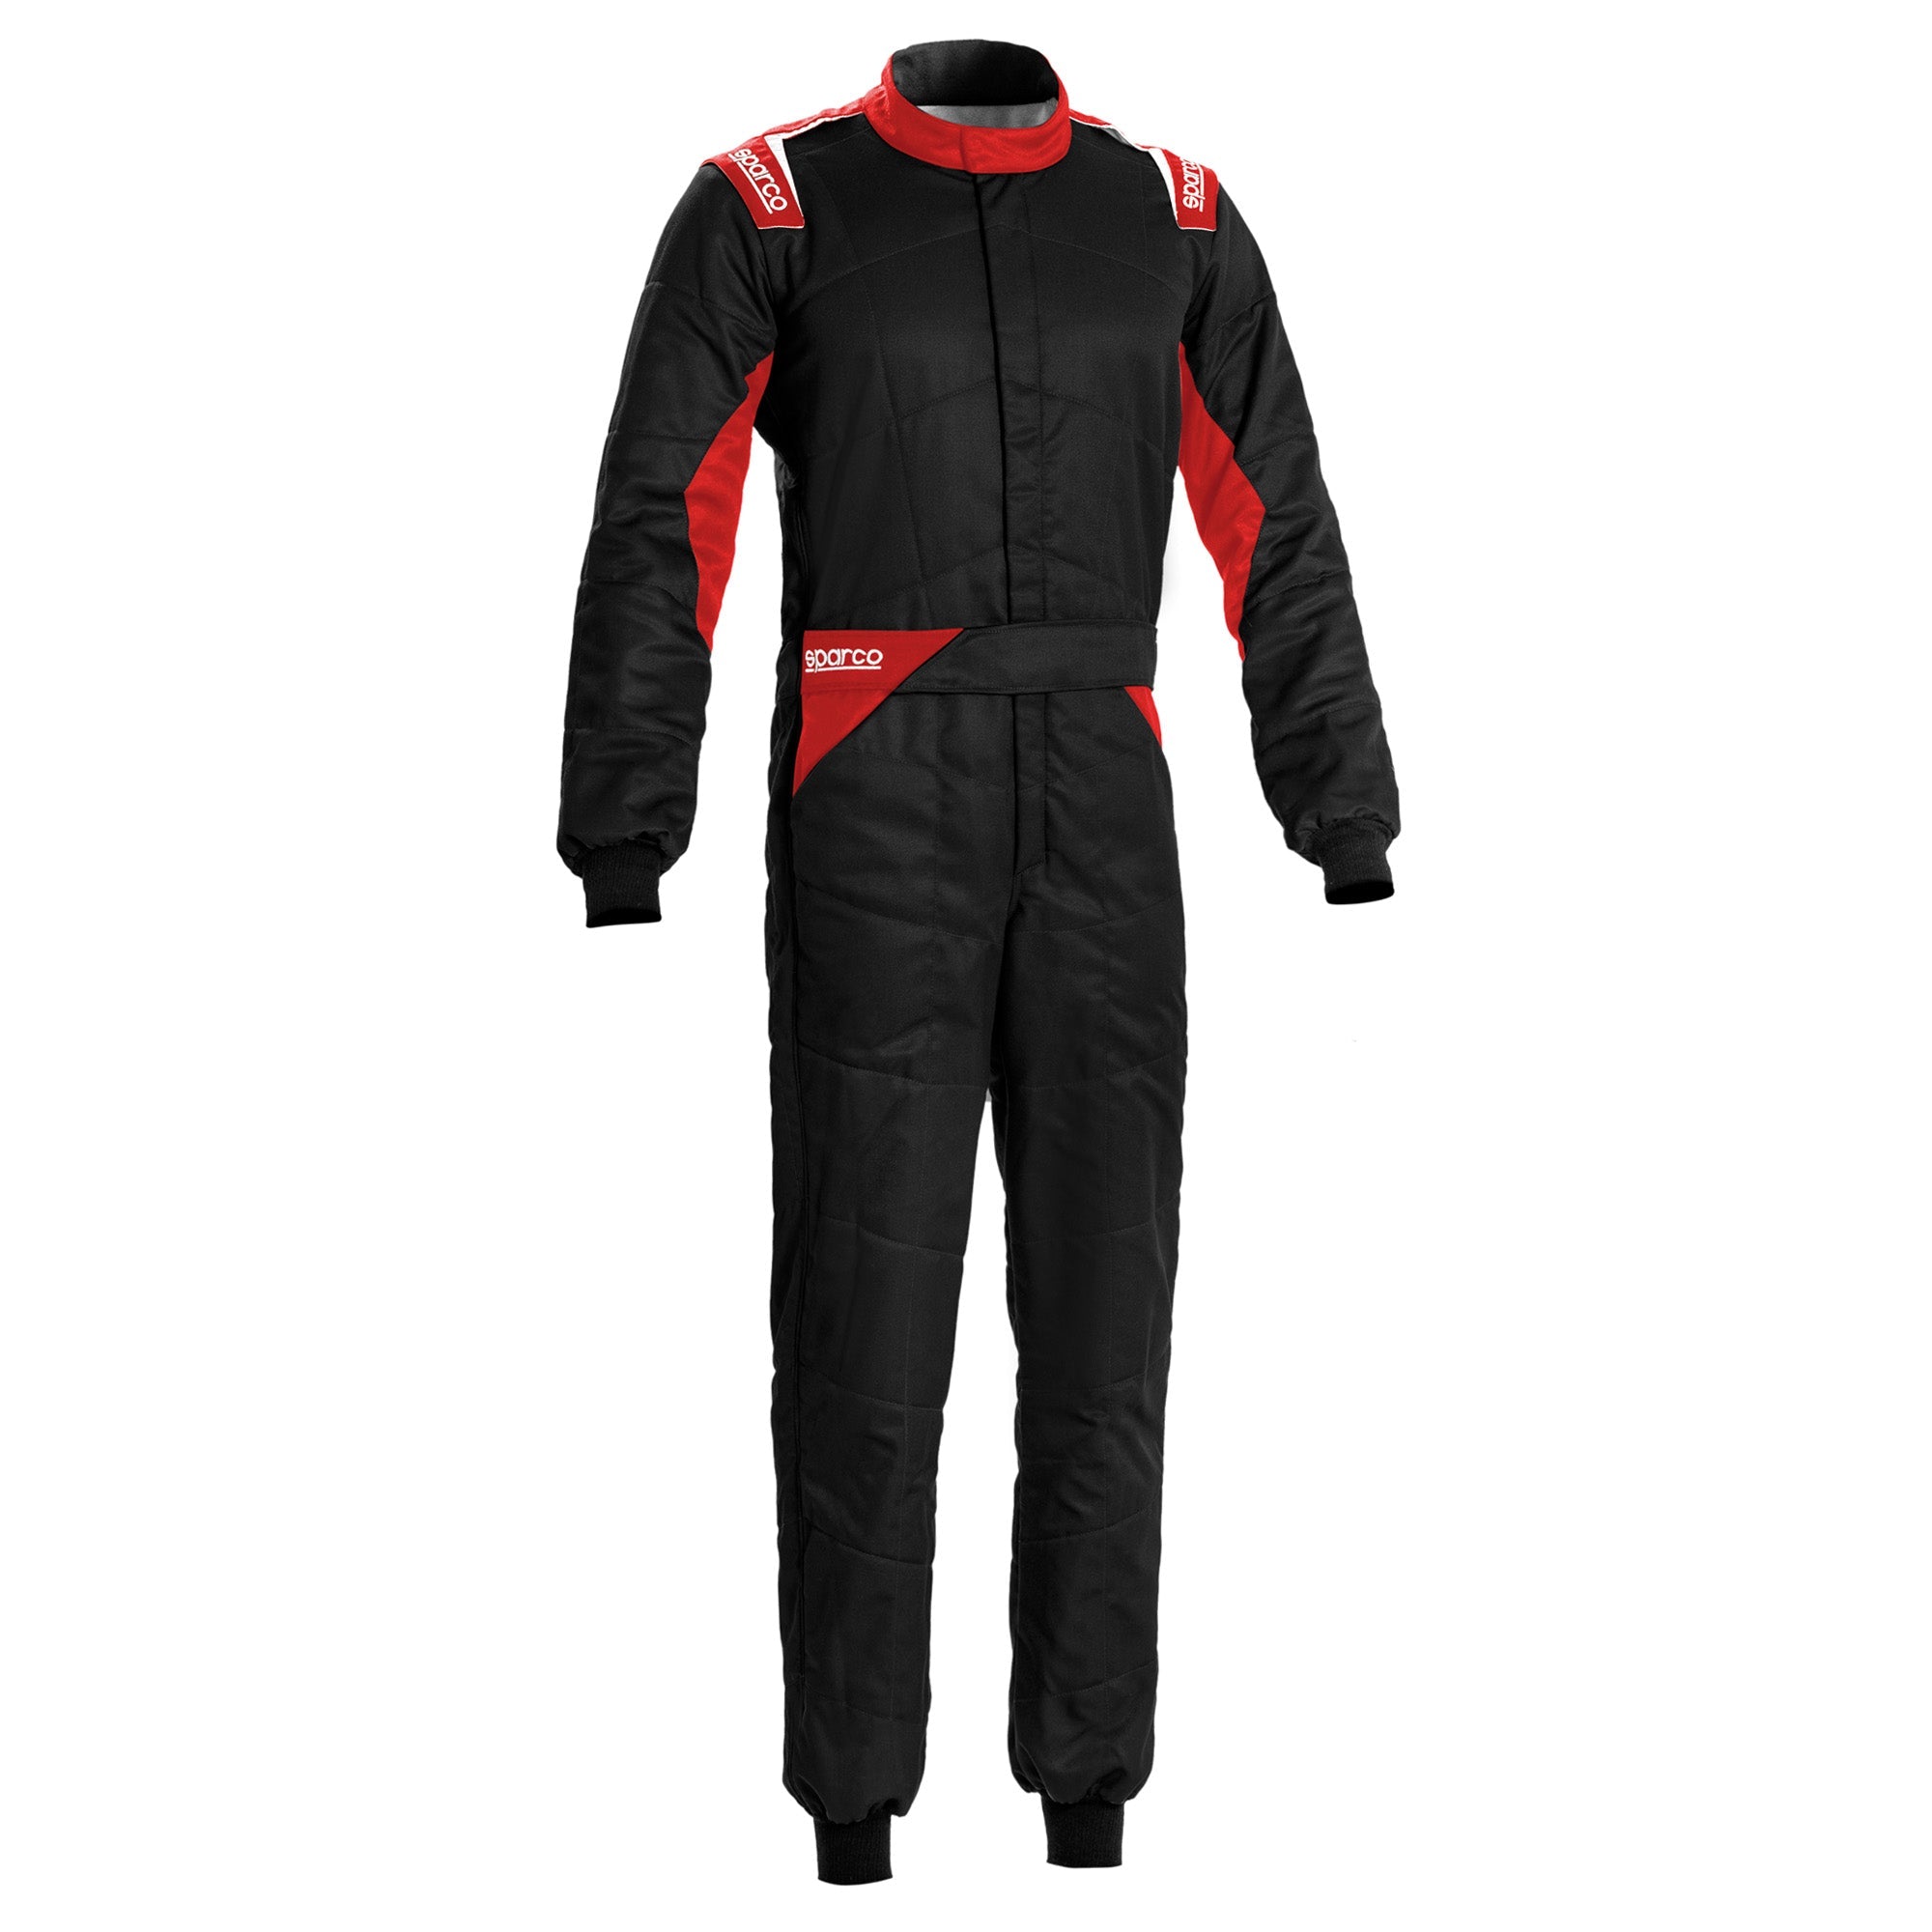 Sparco Sprint Racing Suit - Black/Red